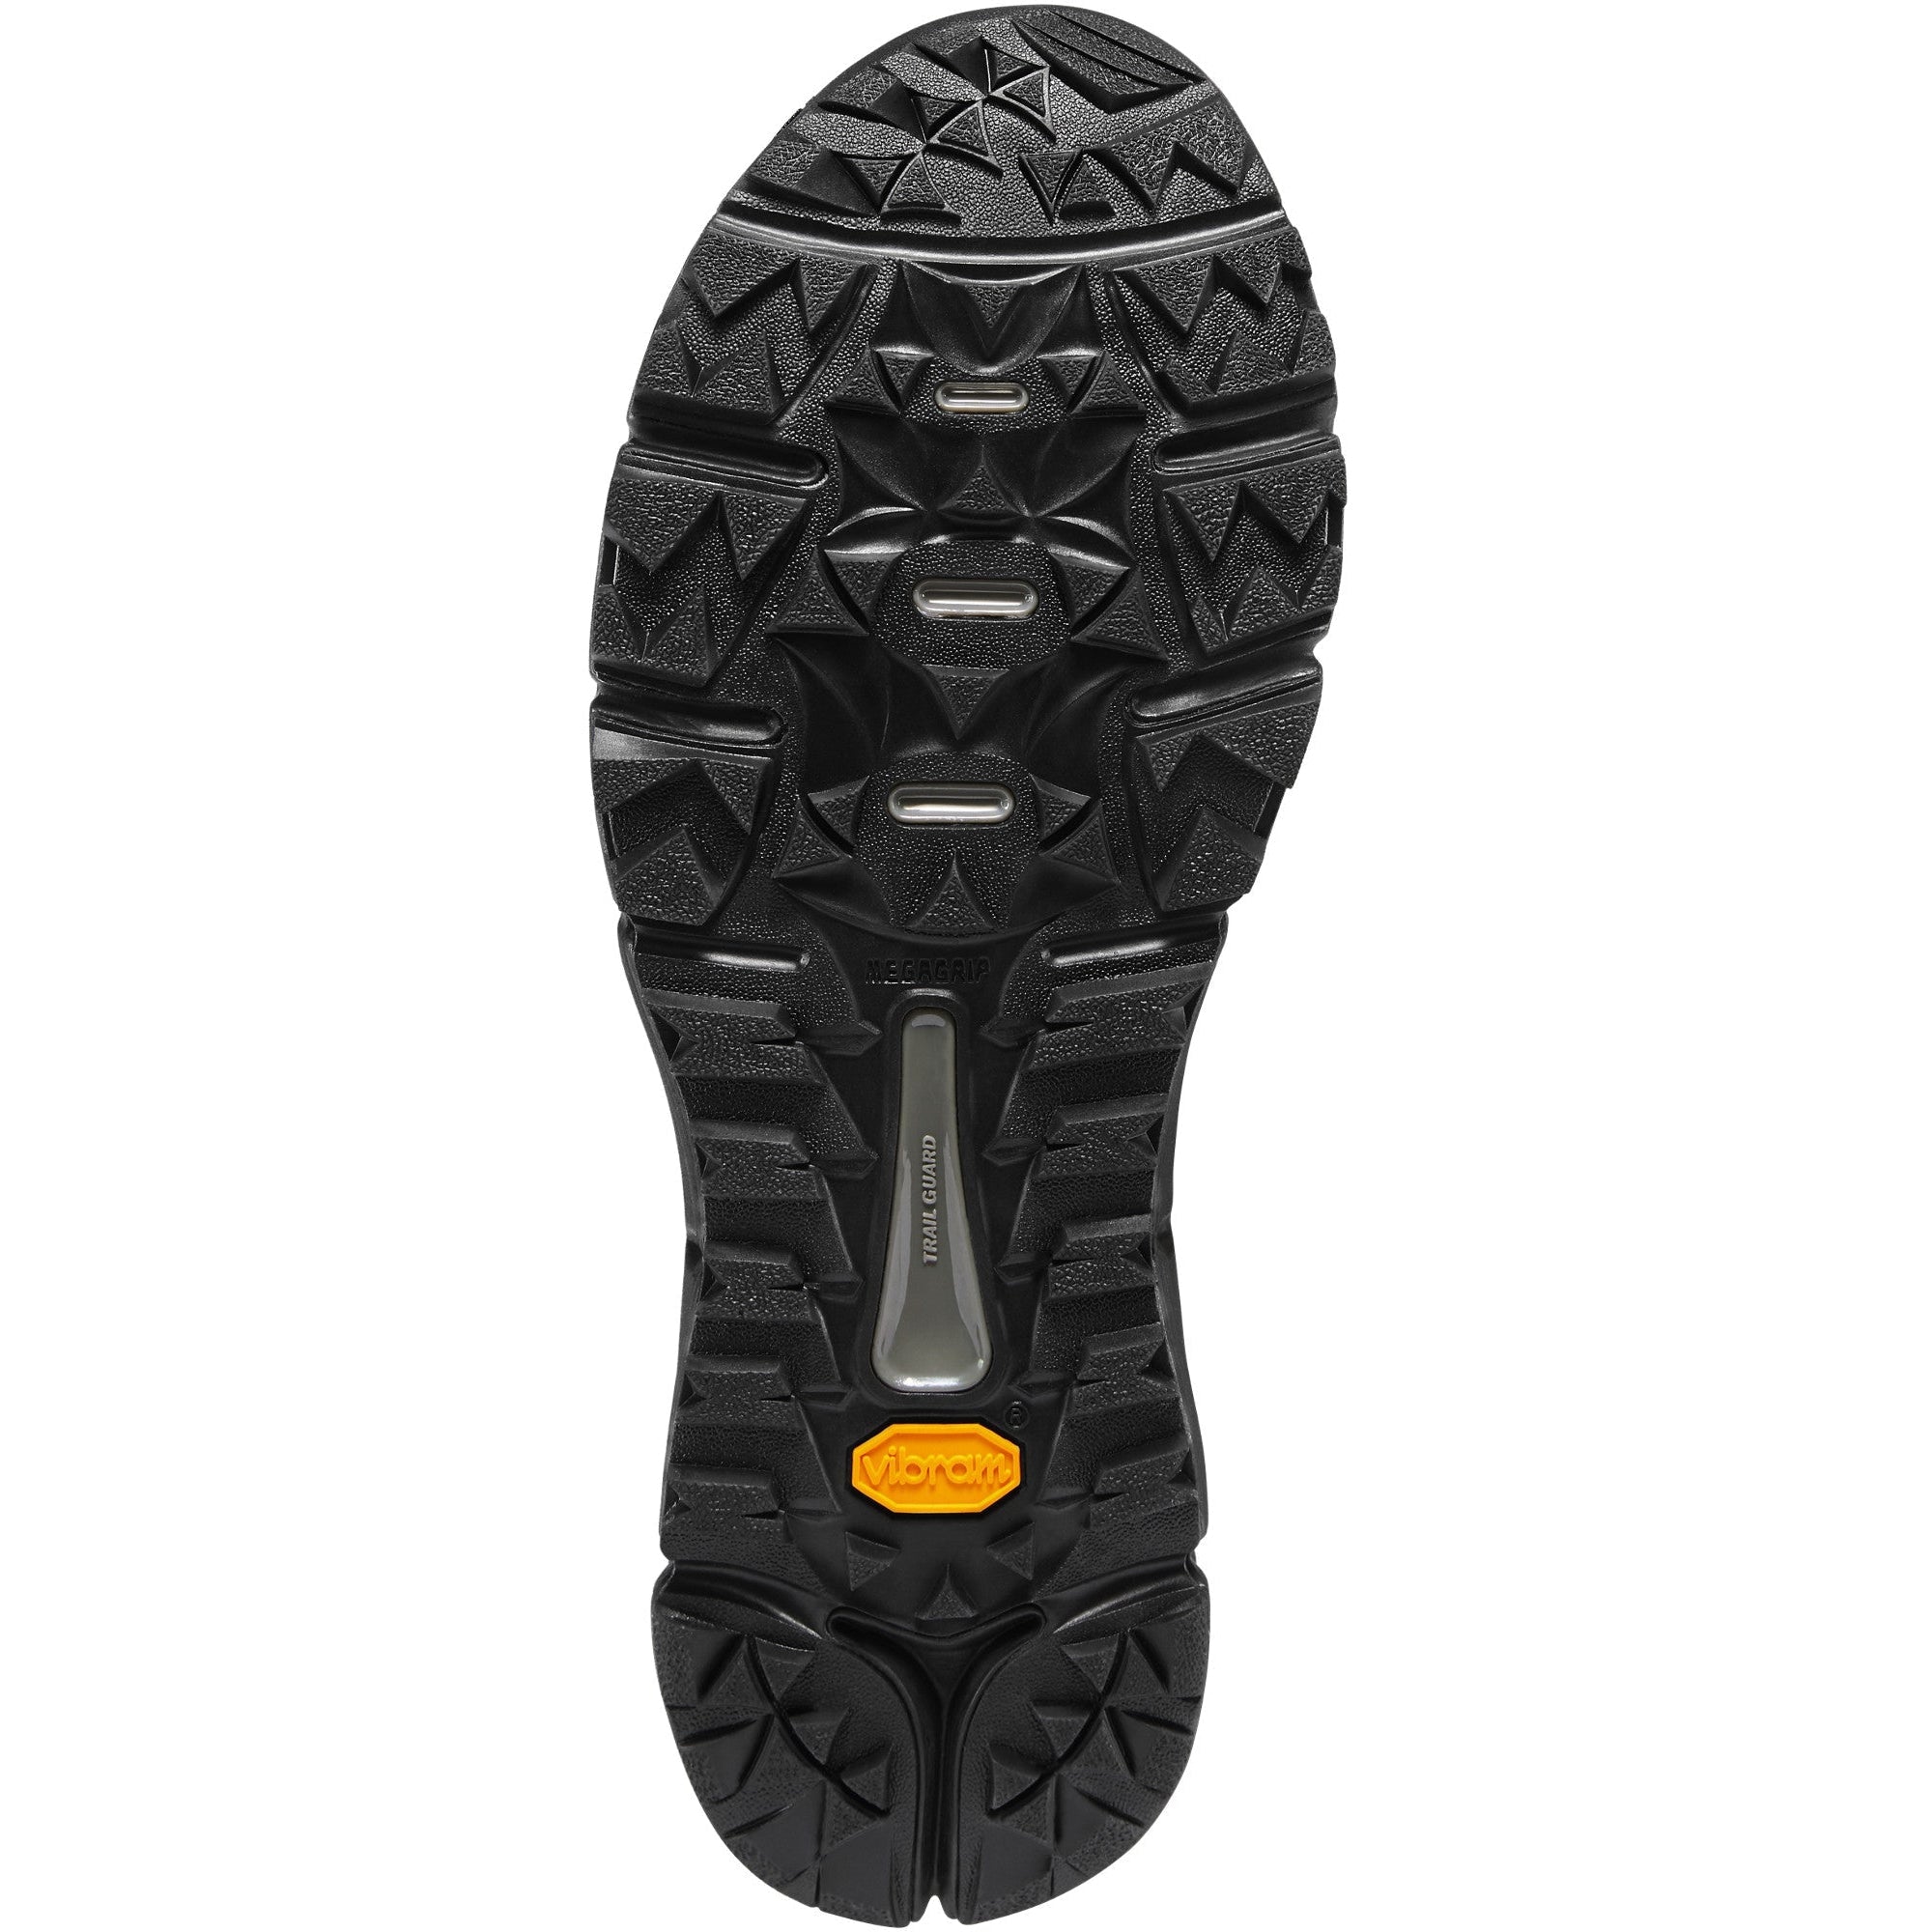 Danner Women's Trail 2650 Mesh 3" Lifestyle Shoe - Black - 61211  - Overlook Boots